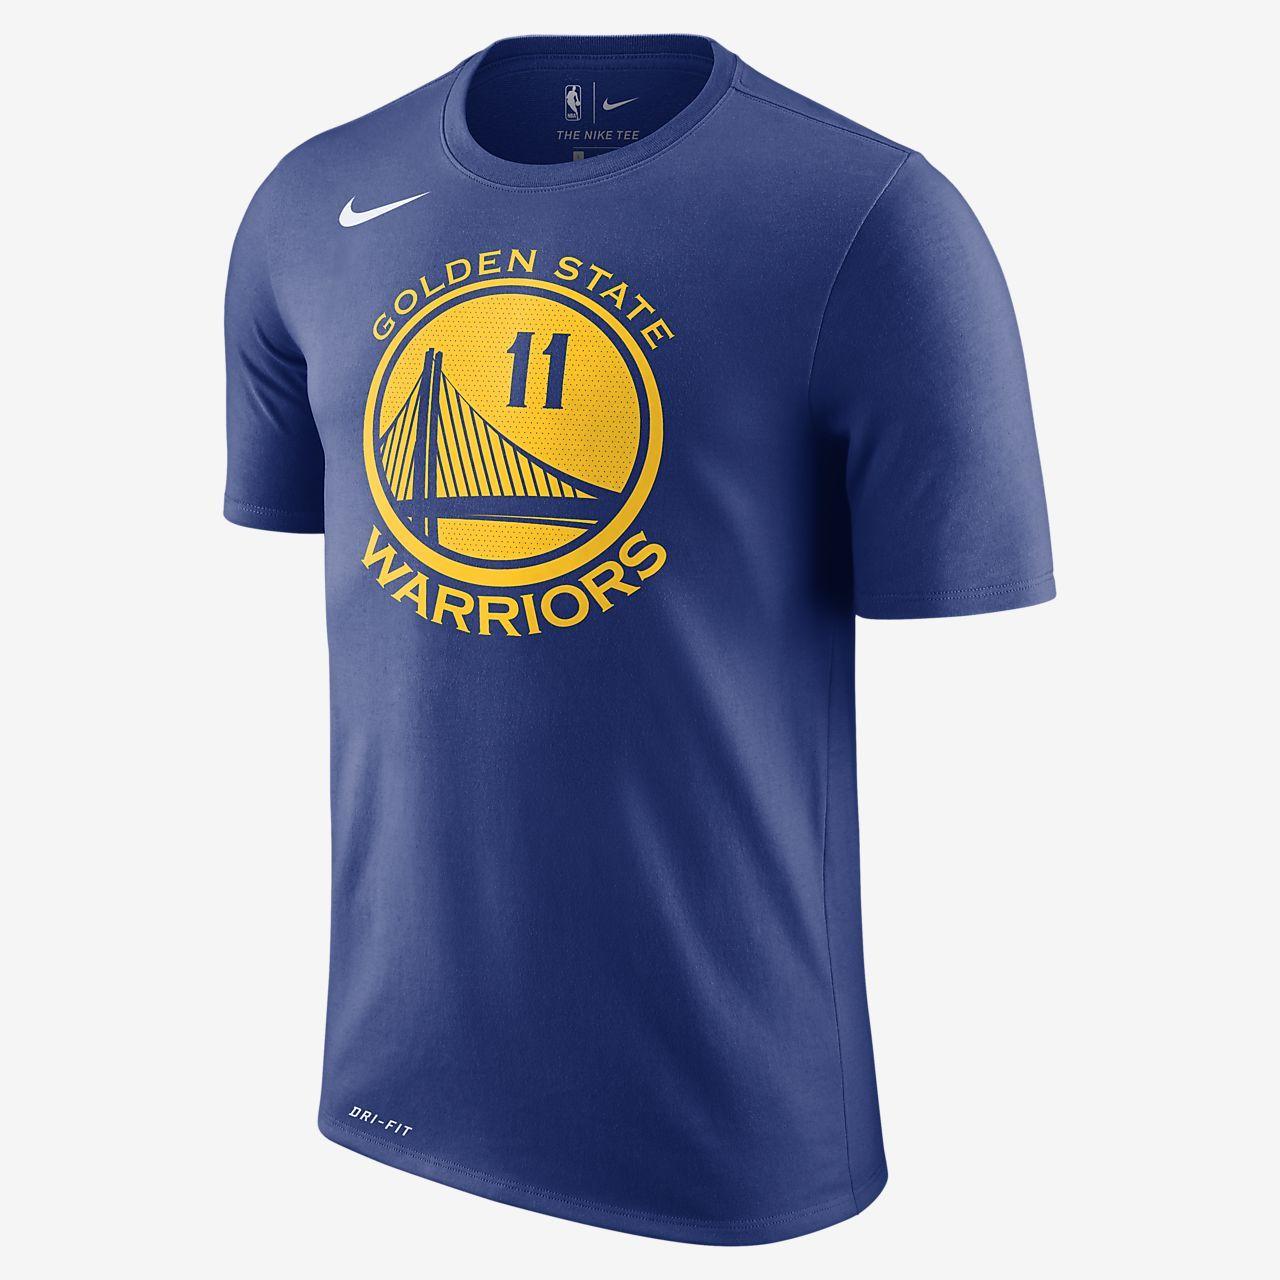 Klay Thompson Logo - Klay Thompson Golden State Warriors Nike Dri-FIT Men's NBA T-Shirt ...